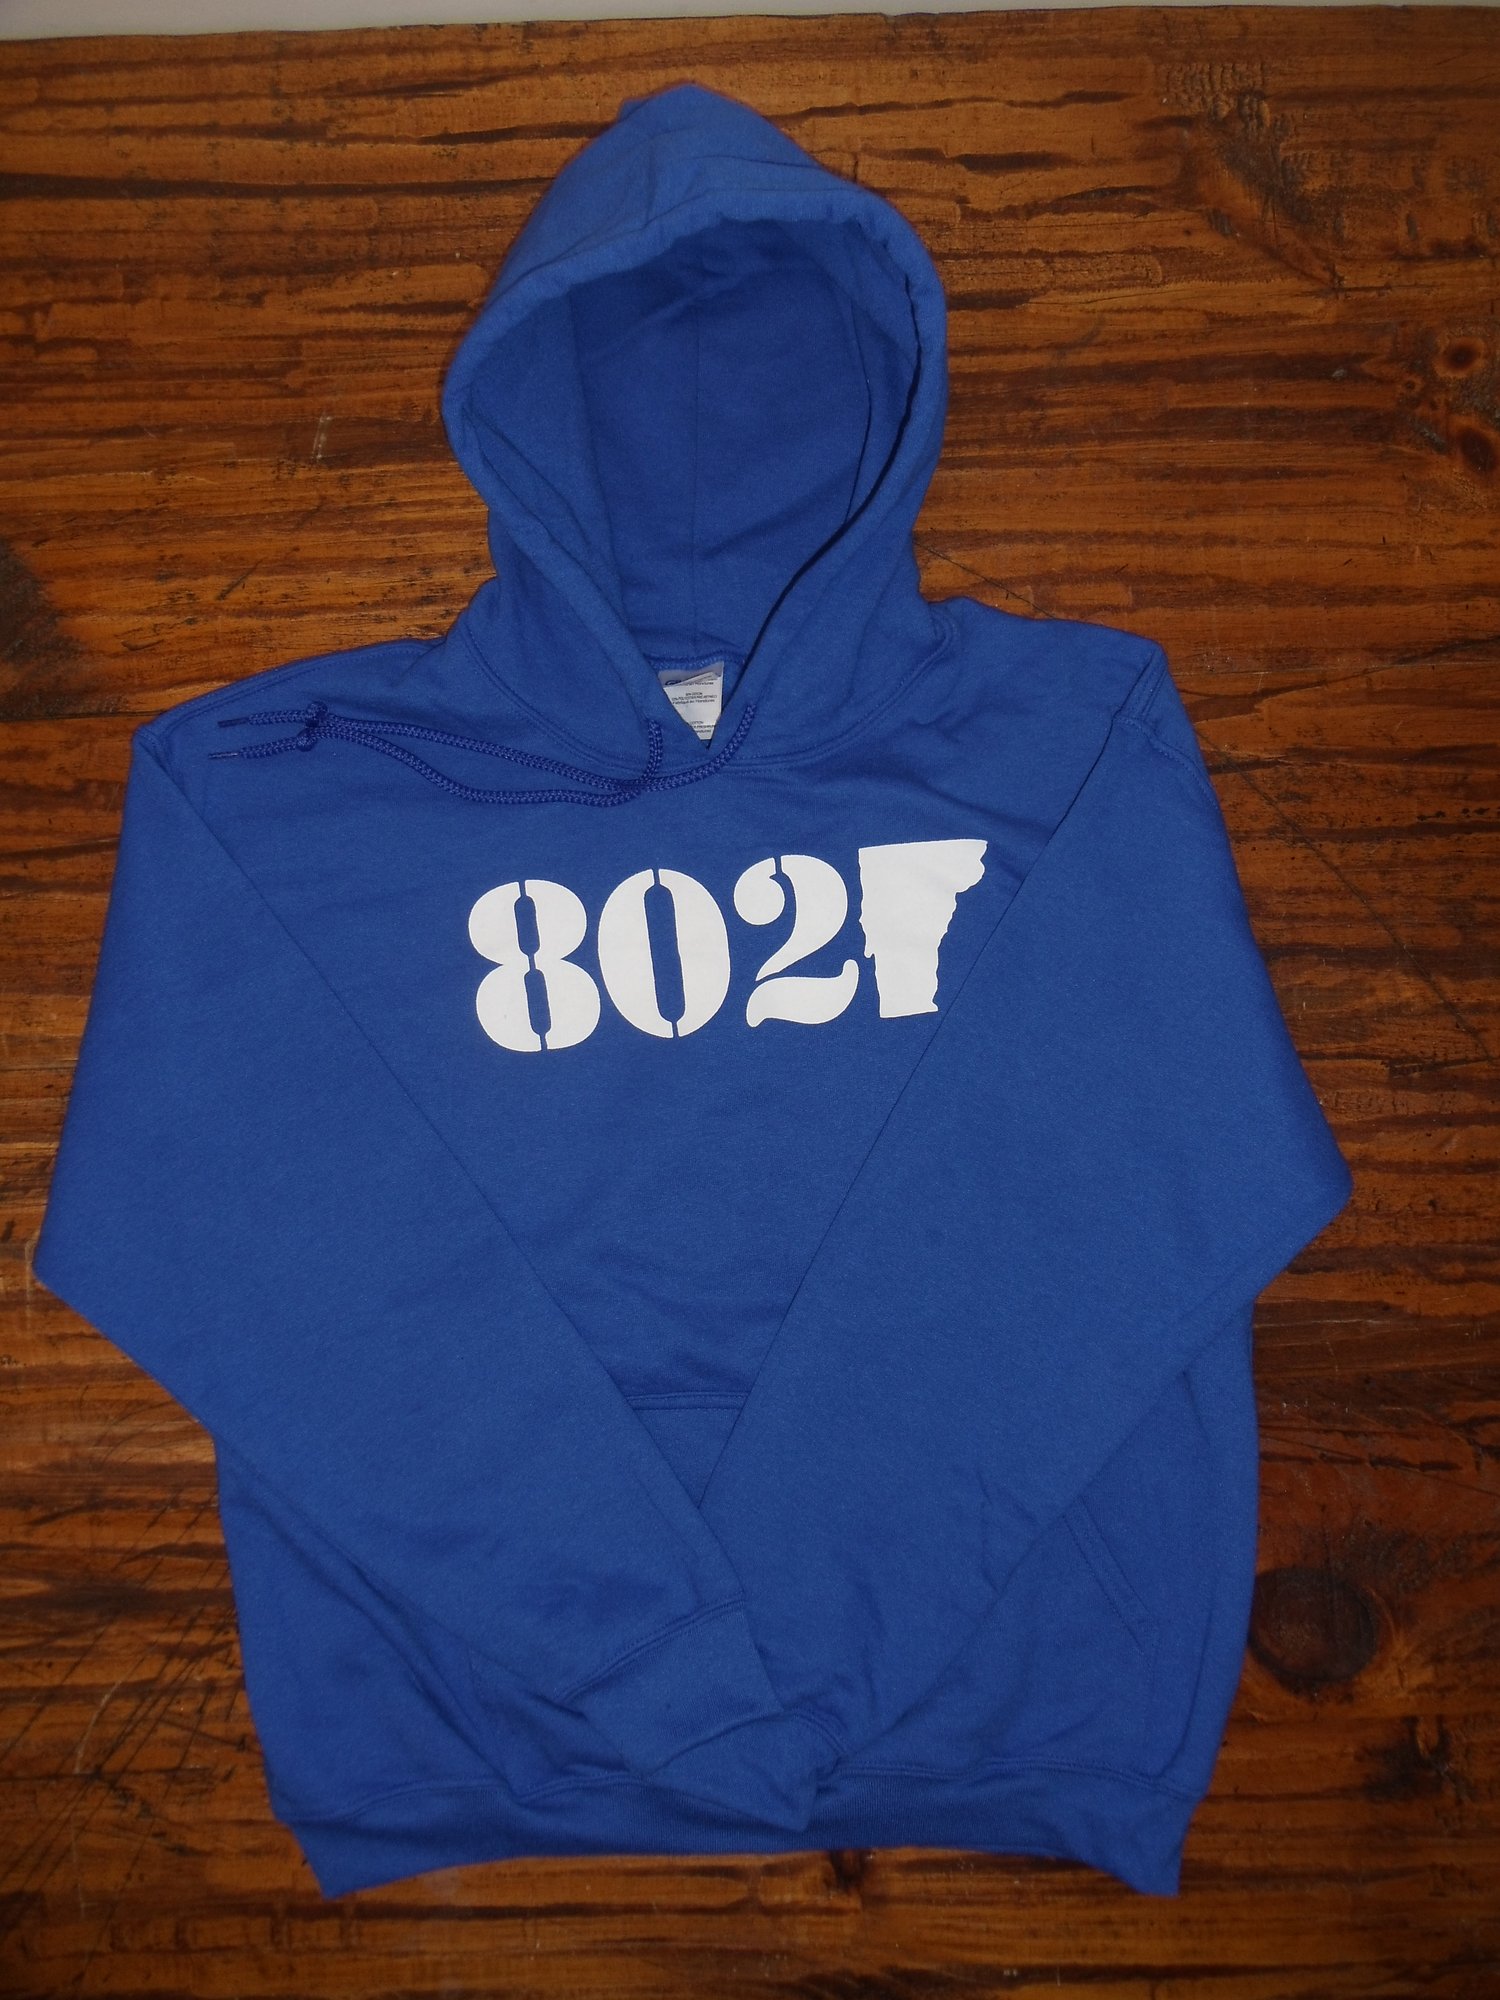 Image of 802 Vermont Hooded Sweatshirt - White on Royal Blue - Vermont Sweatshirt - 802 Sweatshirt